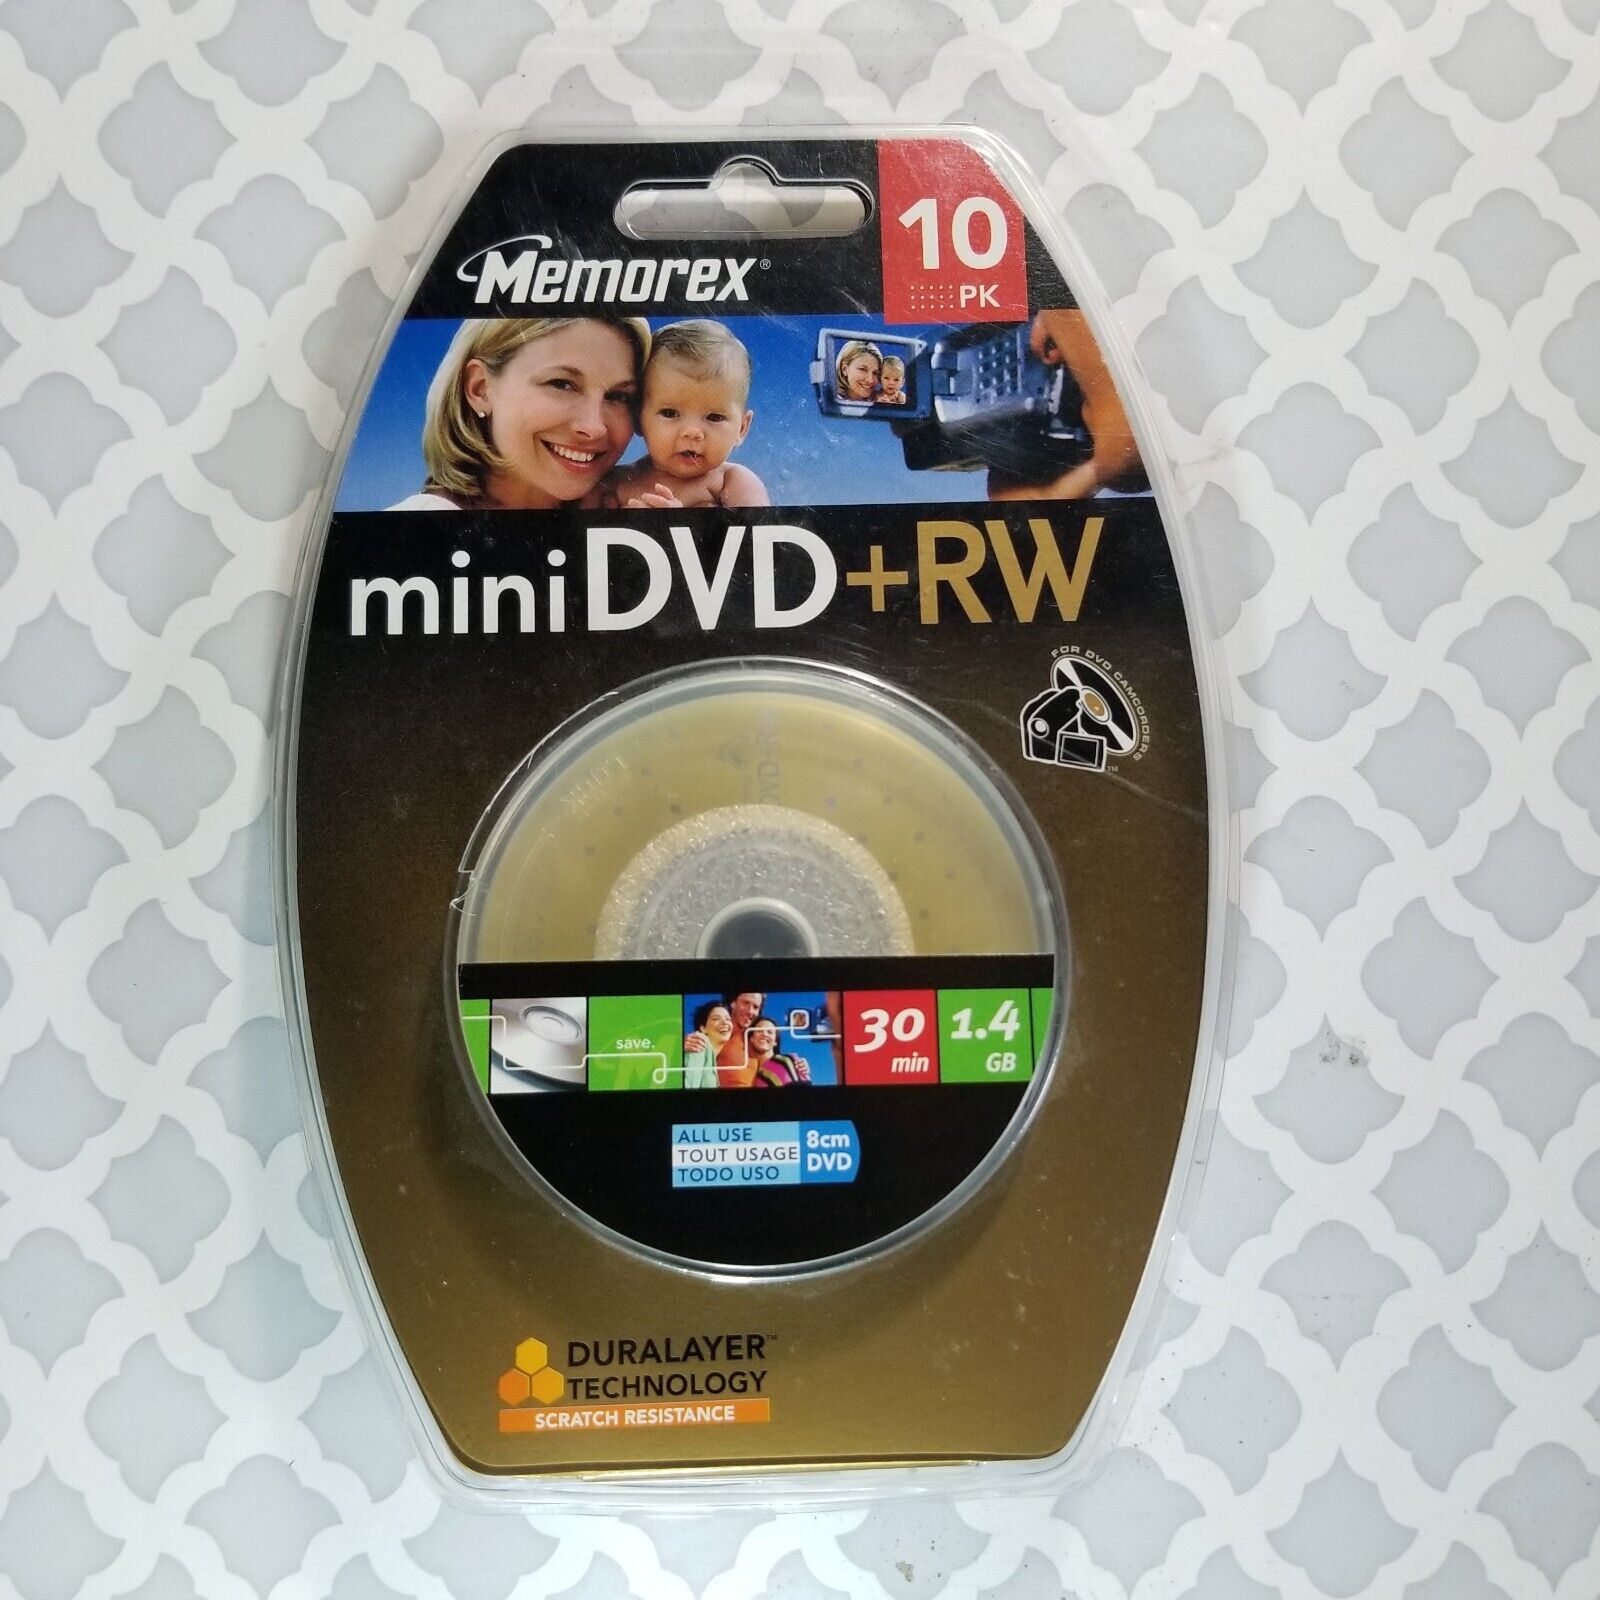 Memorex Mini DVD + RW Discs 10 Pack DuraLayer Technology Scratch Resistance NEW